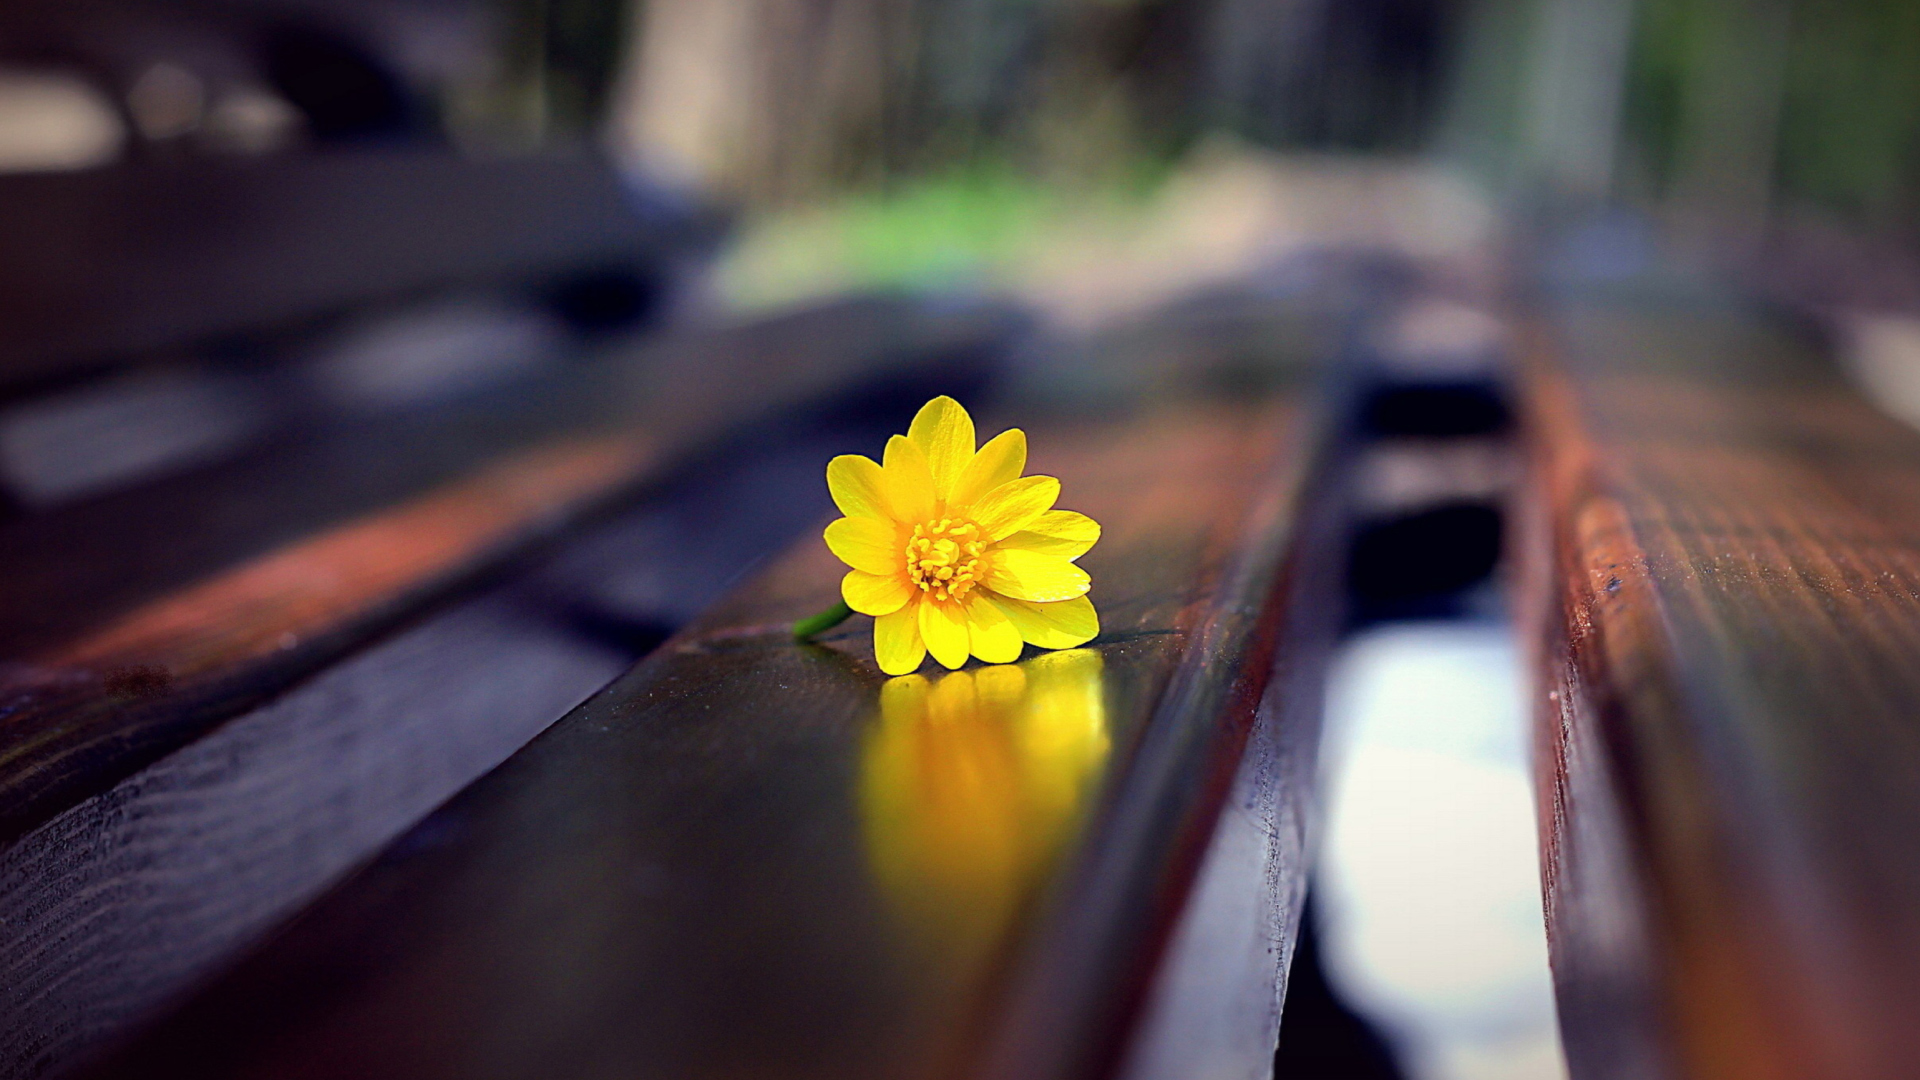 Обои Yellow Flower On Bench 1920x1080